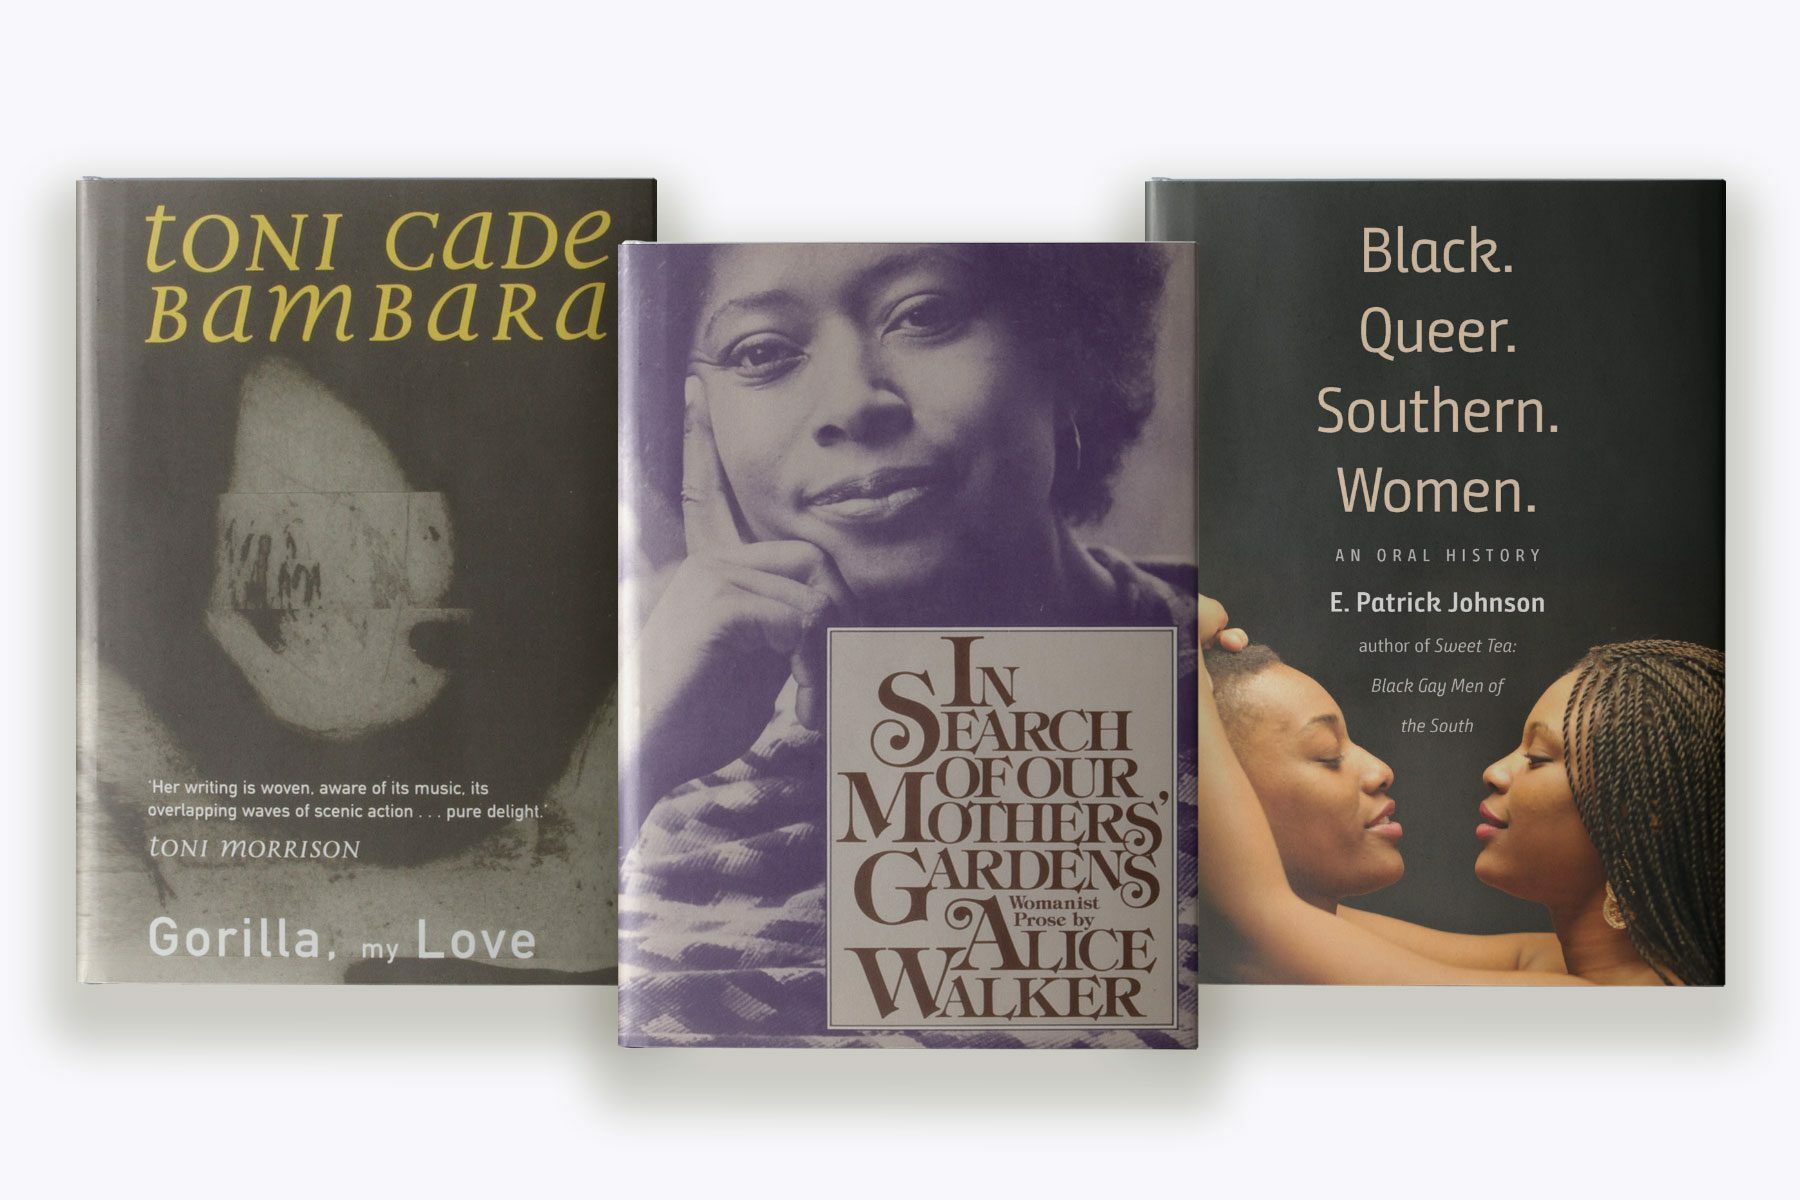 Three book covers: Toni Cade Bambara's 